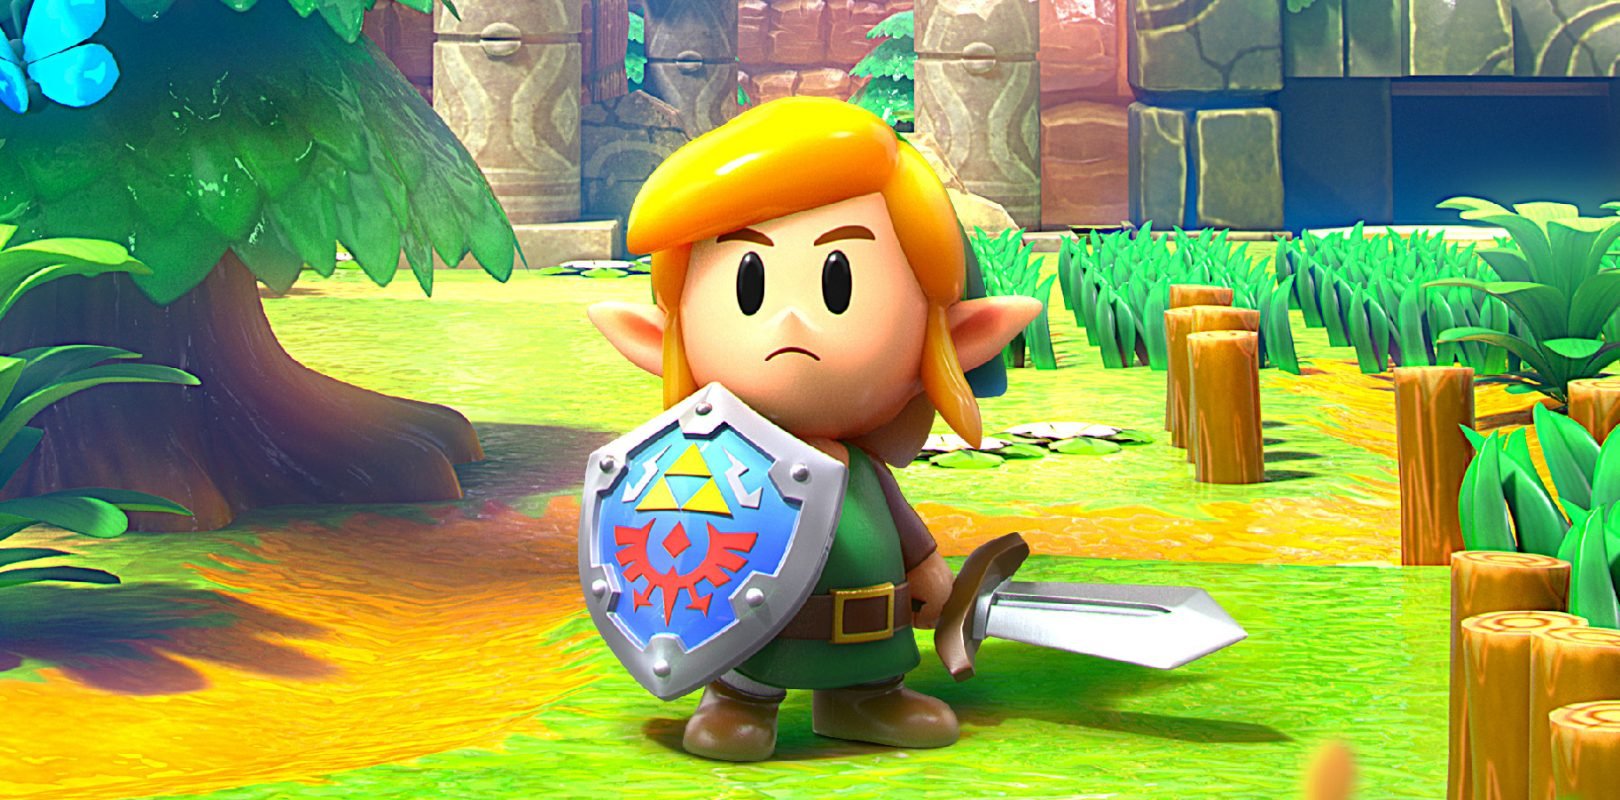 Europe: Zelda Link's Awakening sold 430K copies during first 3 days on sale  - My Nintendo News